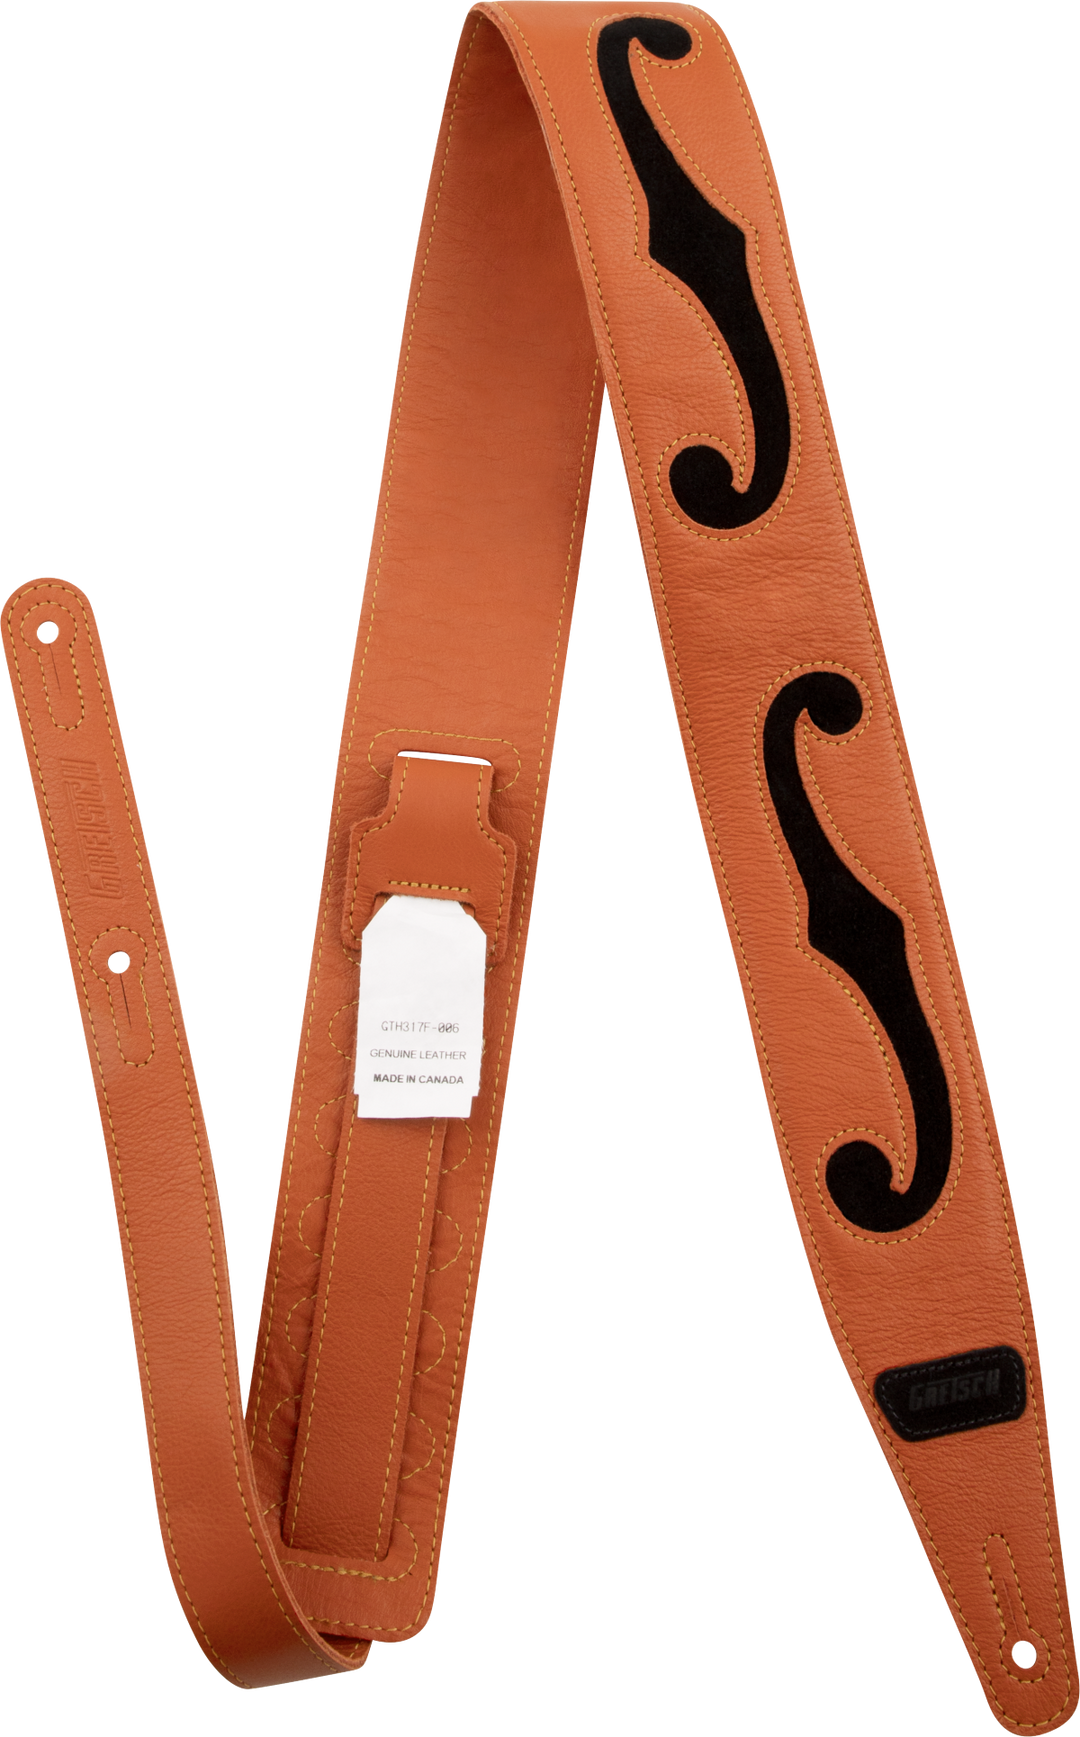 Gretsch F-Holes Leather Strap, Orange and Black, 3"